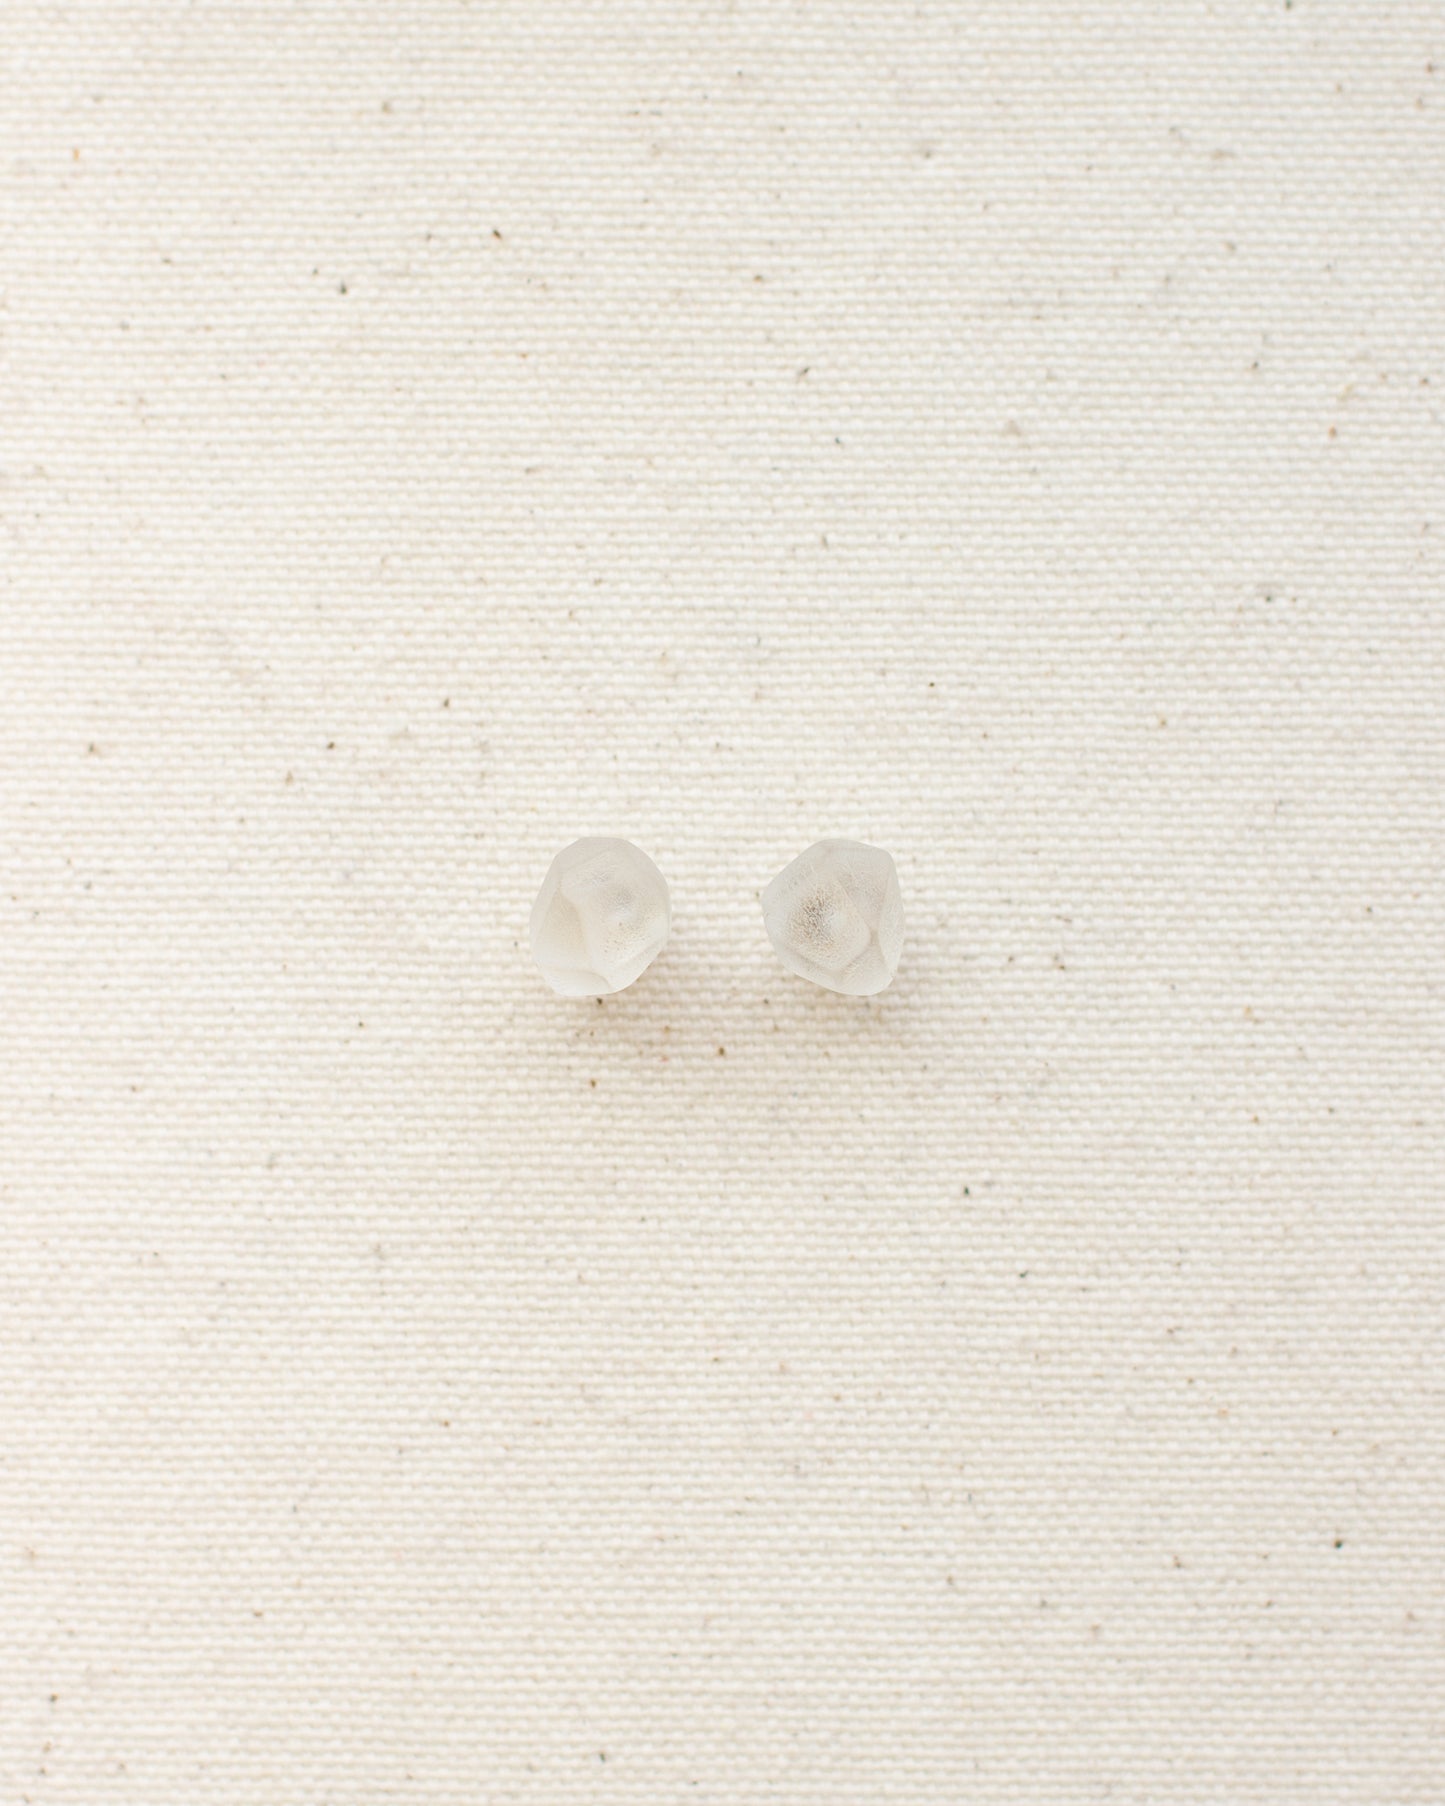 Acrylic Single Stone Earrings